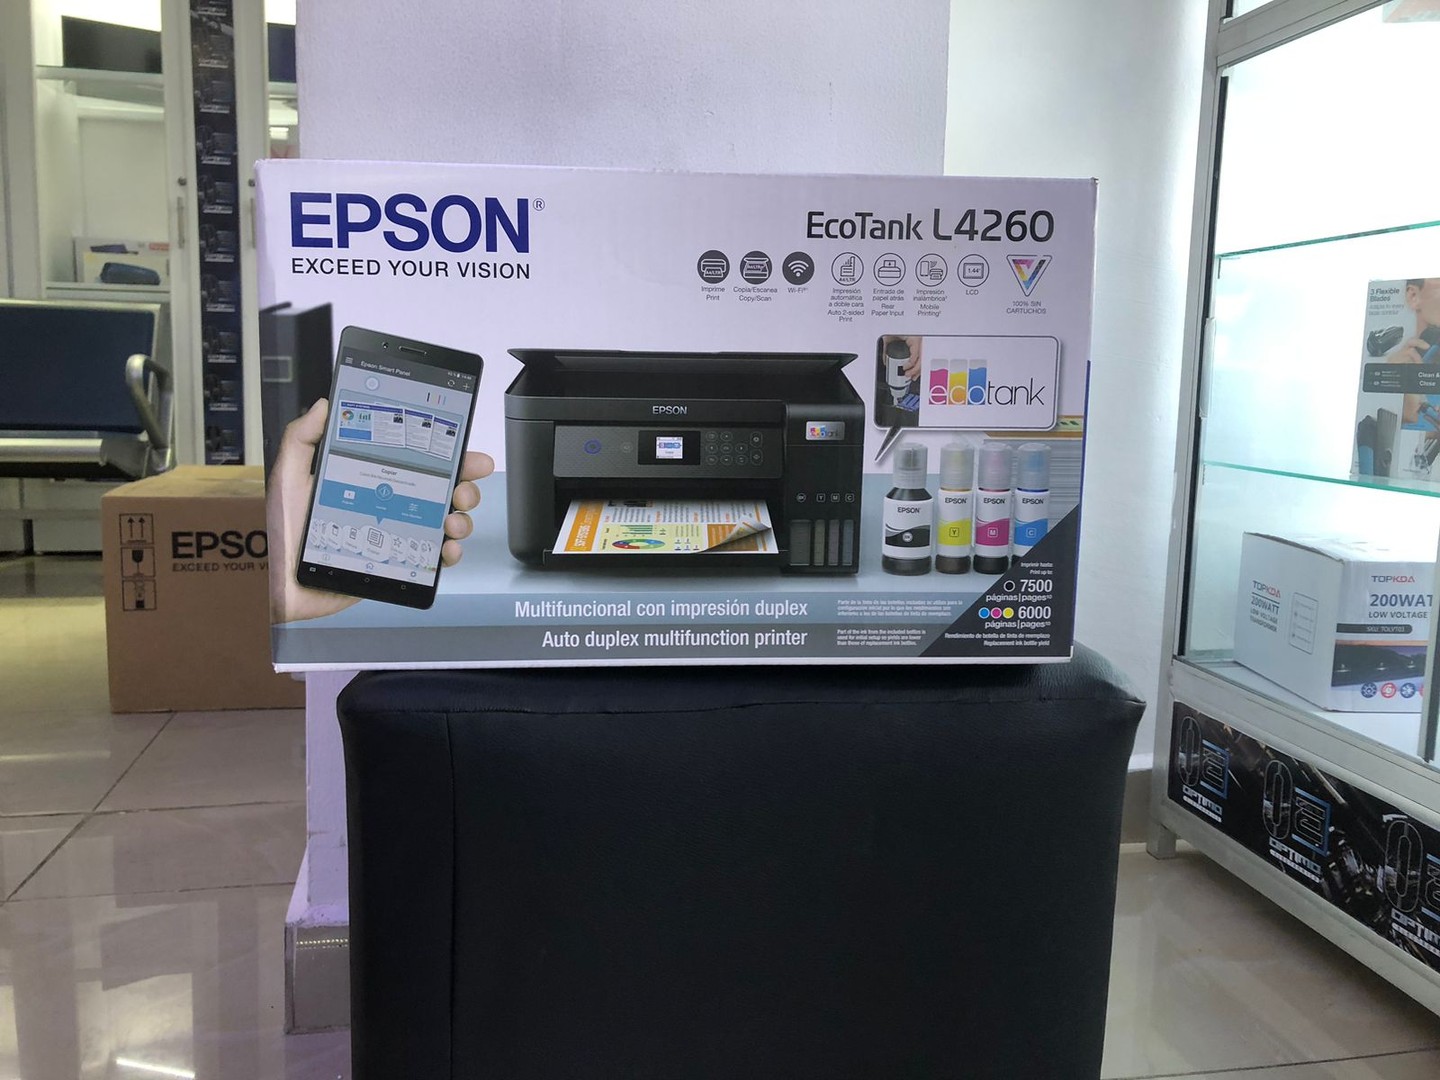 impresoras y scanners - Impresora Epson L4260 Multifuncion, Wifi y Cable USB - Pantalla LCD